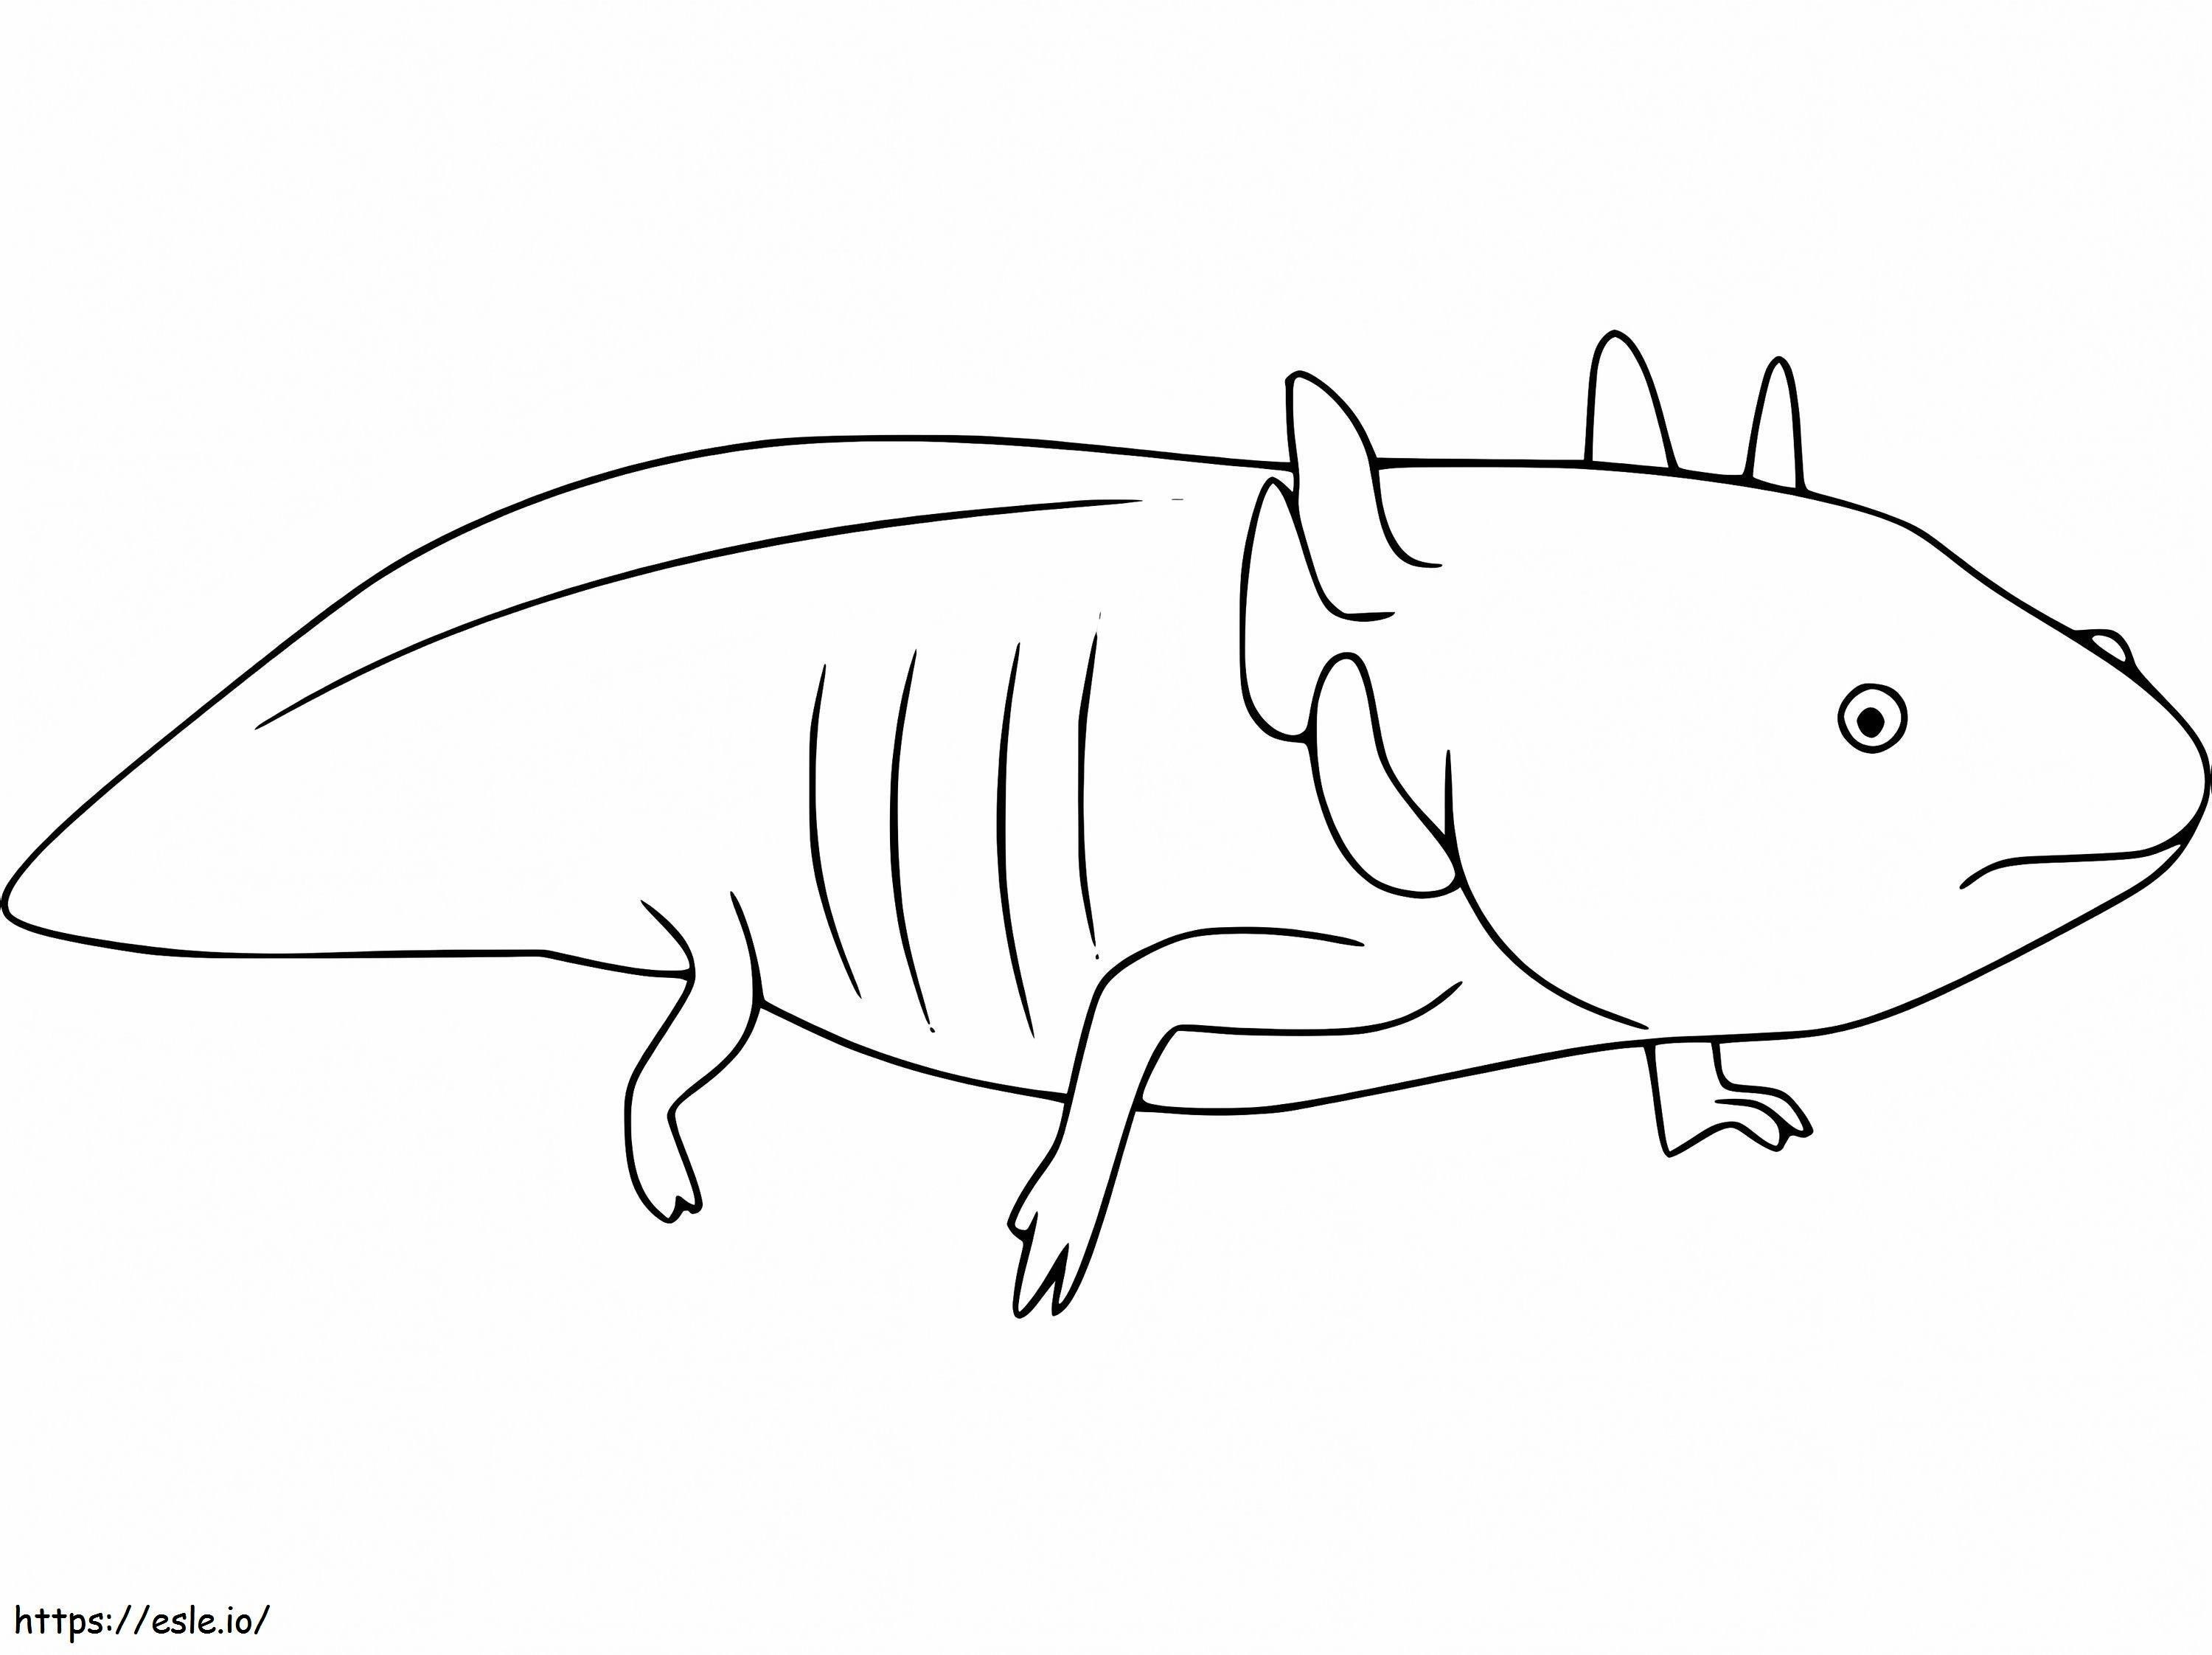 Printable Axolotl coloring page